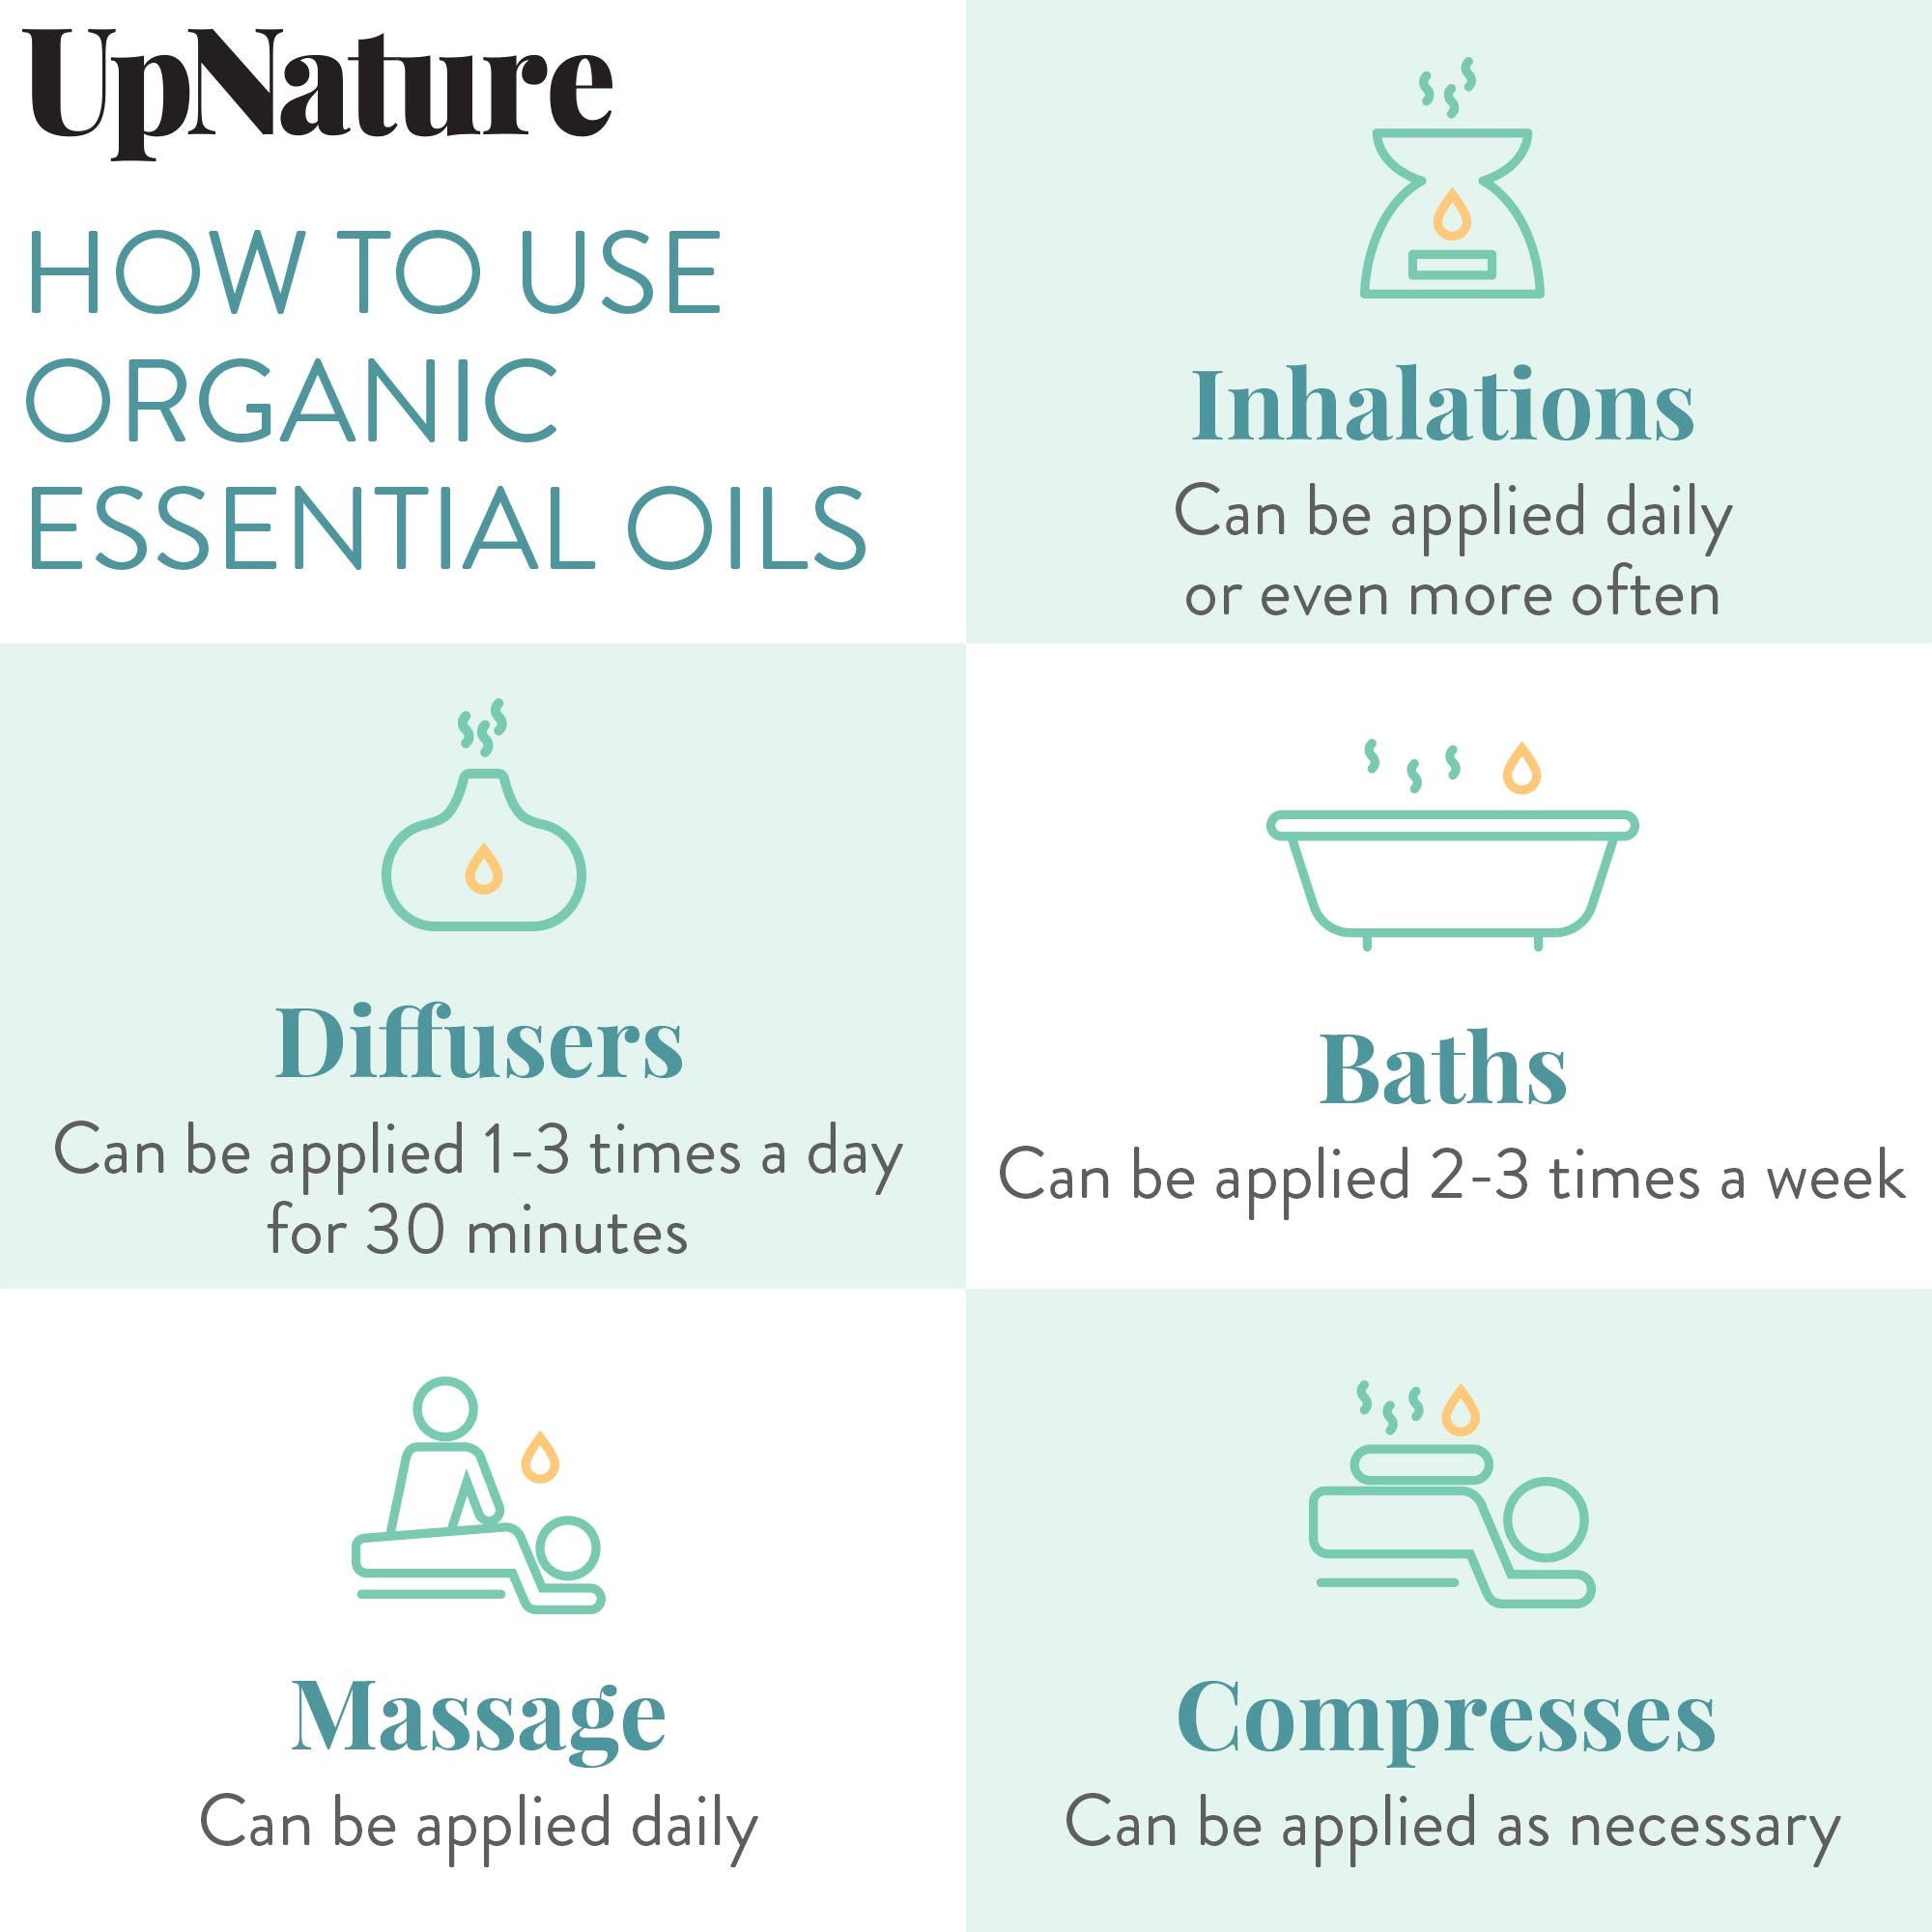 Dream Essential Oils for Sleep - 100% Pure & Potent Essential Oil Sleep Blend - Lavender Chamomile & Citrus - Better Sleep Essential Oil